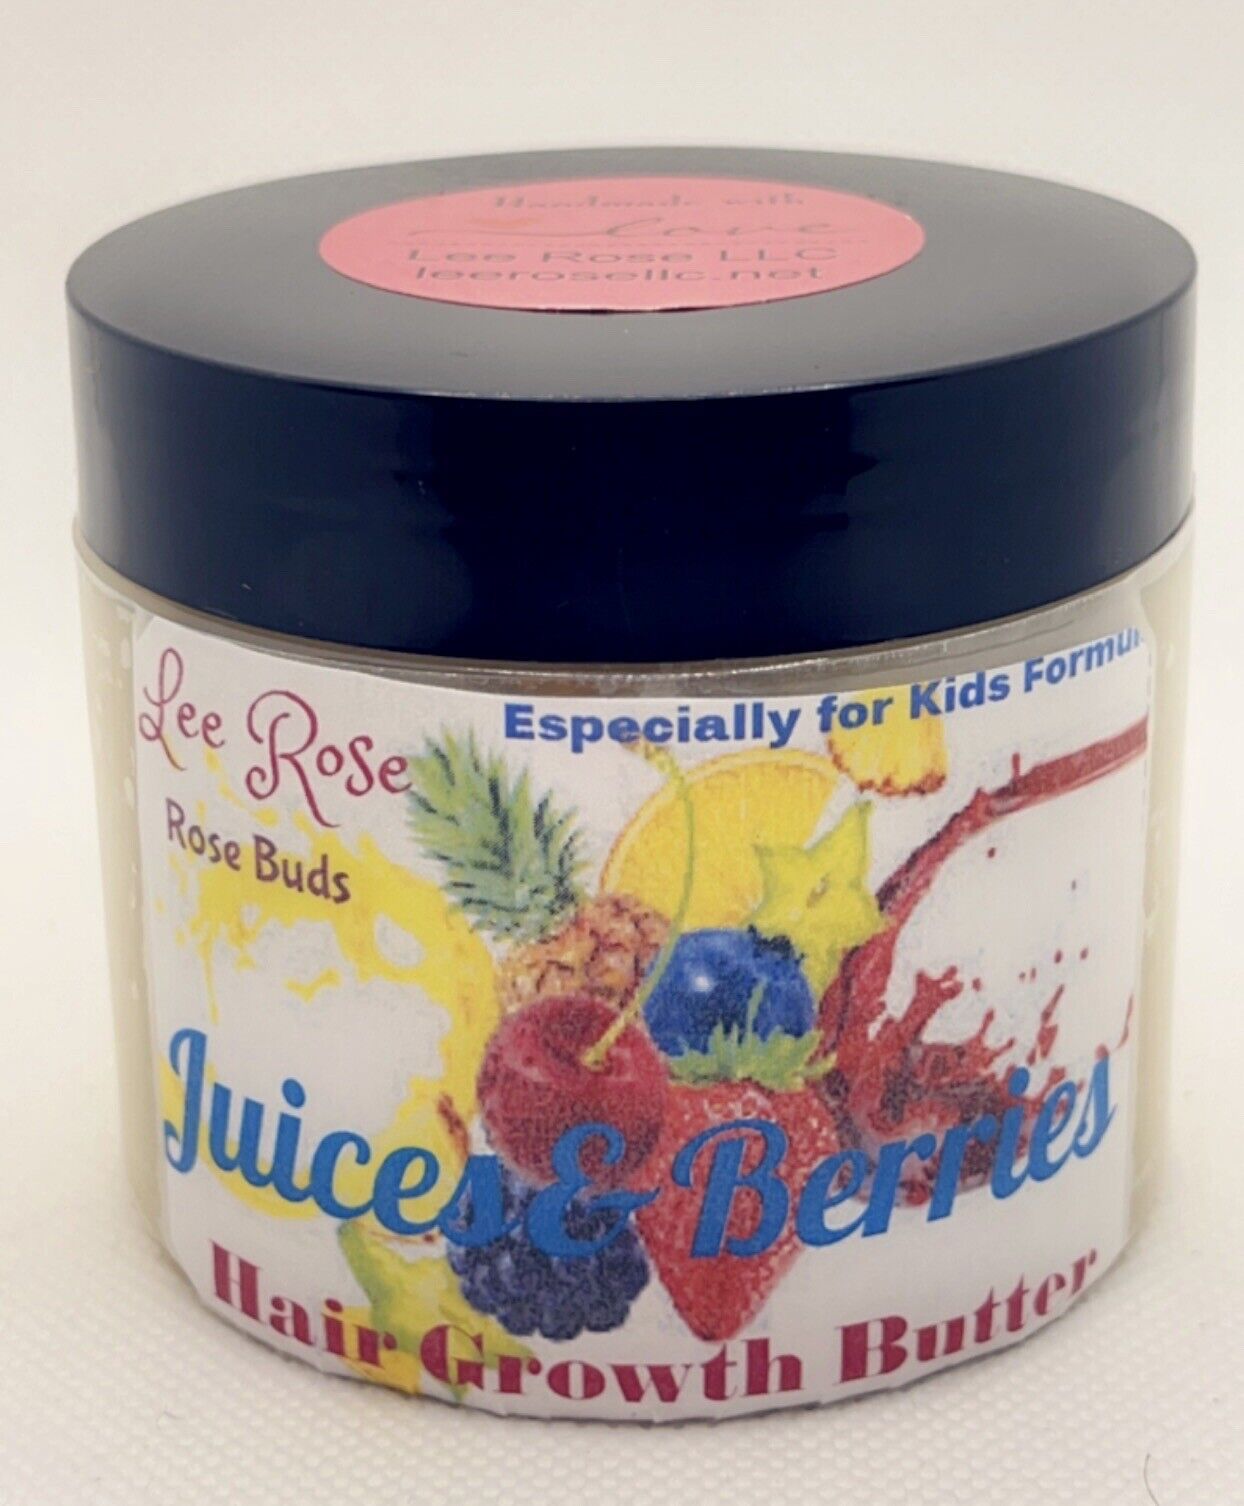 Juices&Berries (Hair Growth Butter )Shea & Aloe Hair